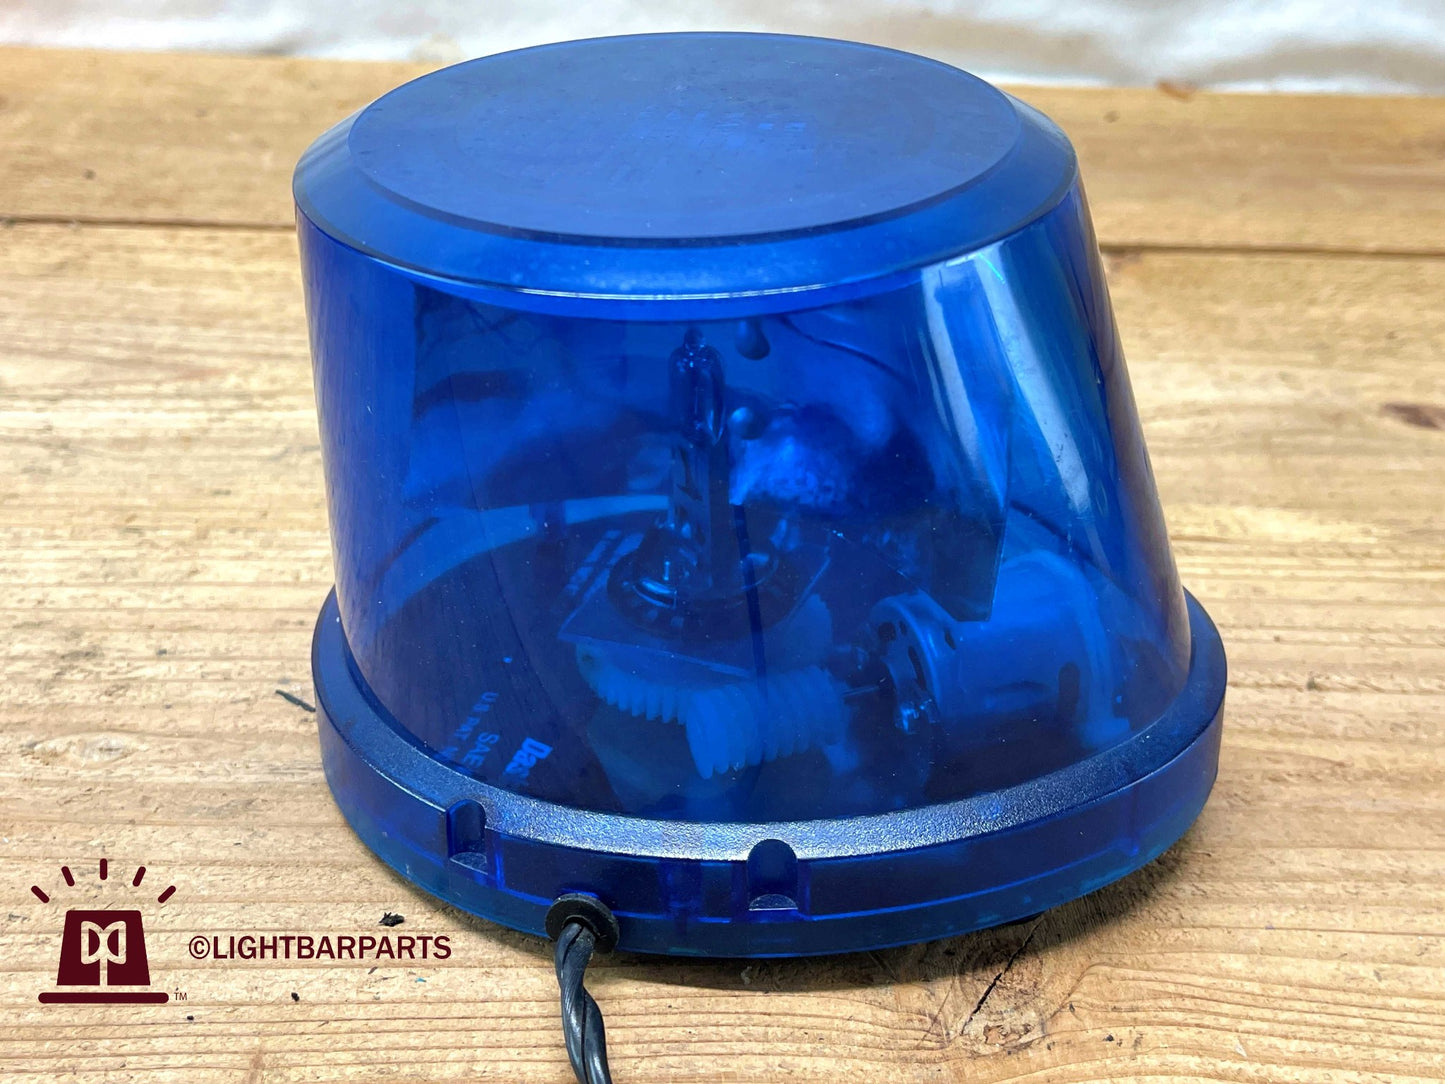 Code 3 DashLaser - Beacon Light - Blue Dome - Standard Speed - Long Cord